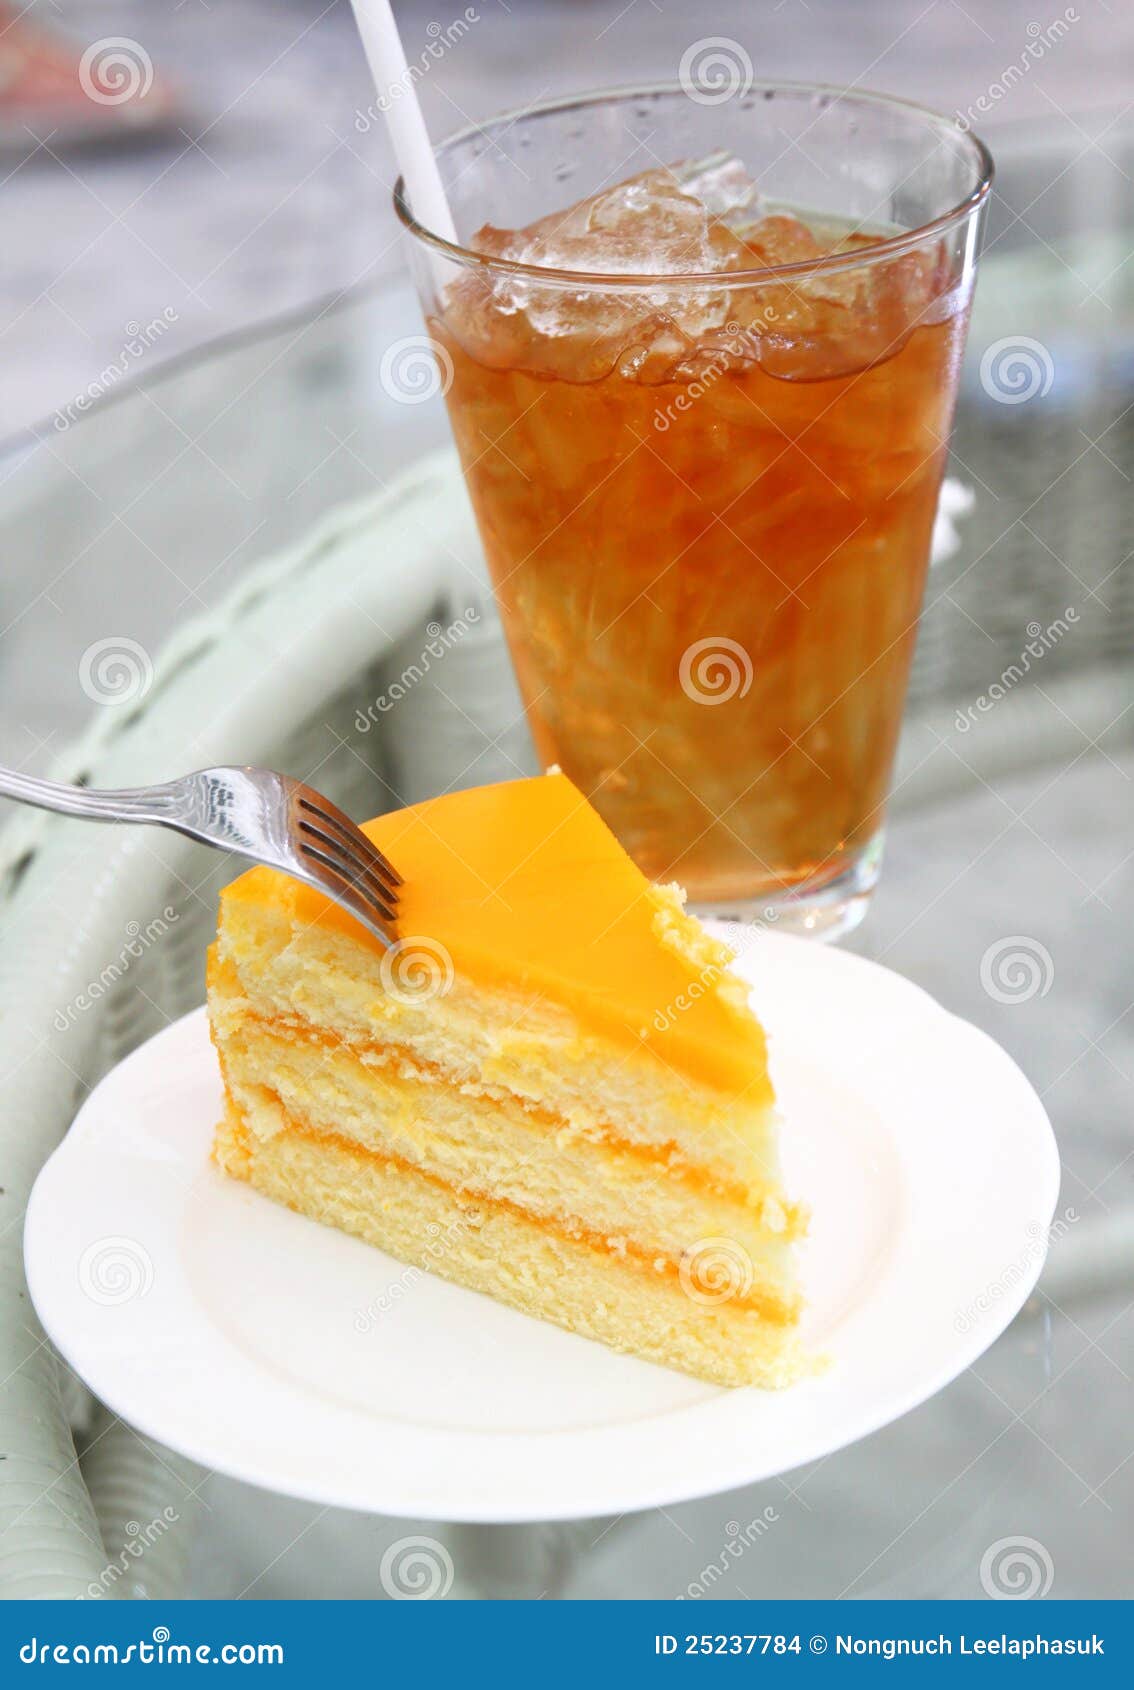 Orange Cake With Iced Tea Stock Images Image 25237784